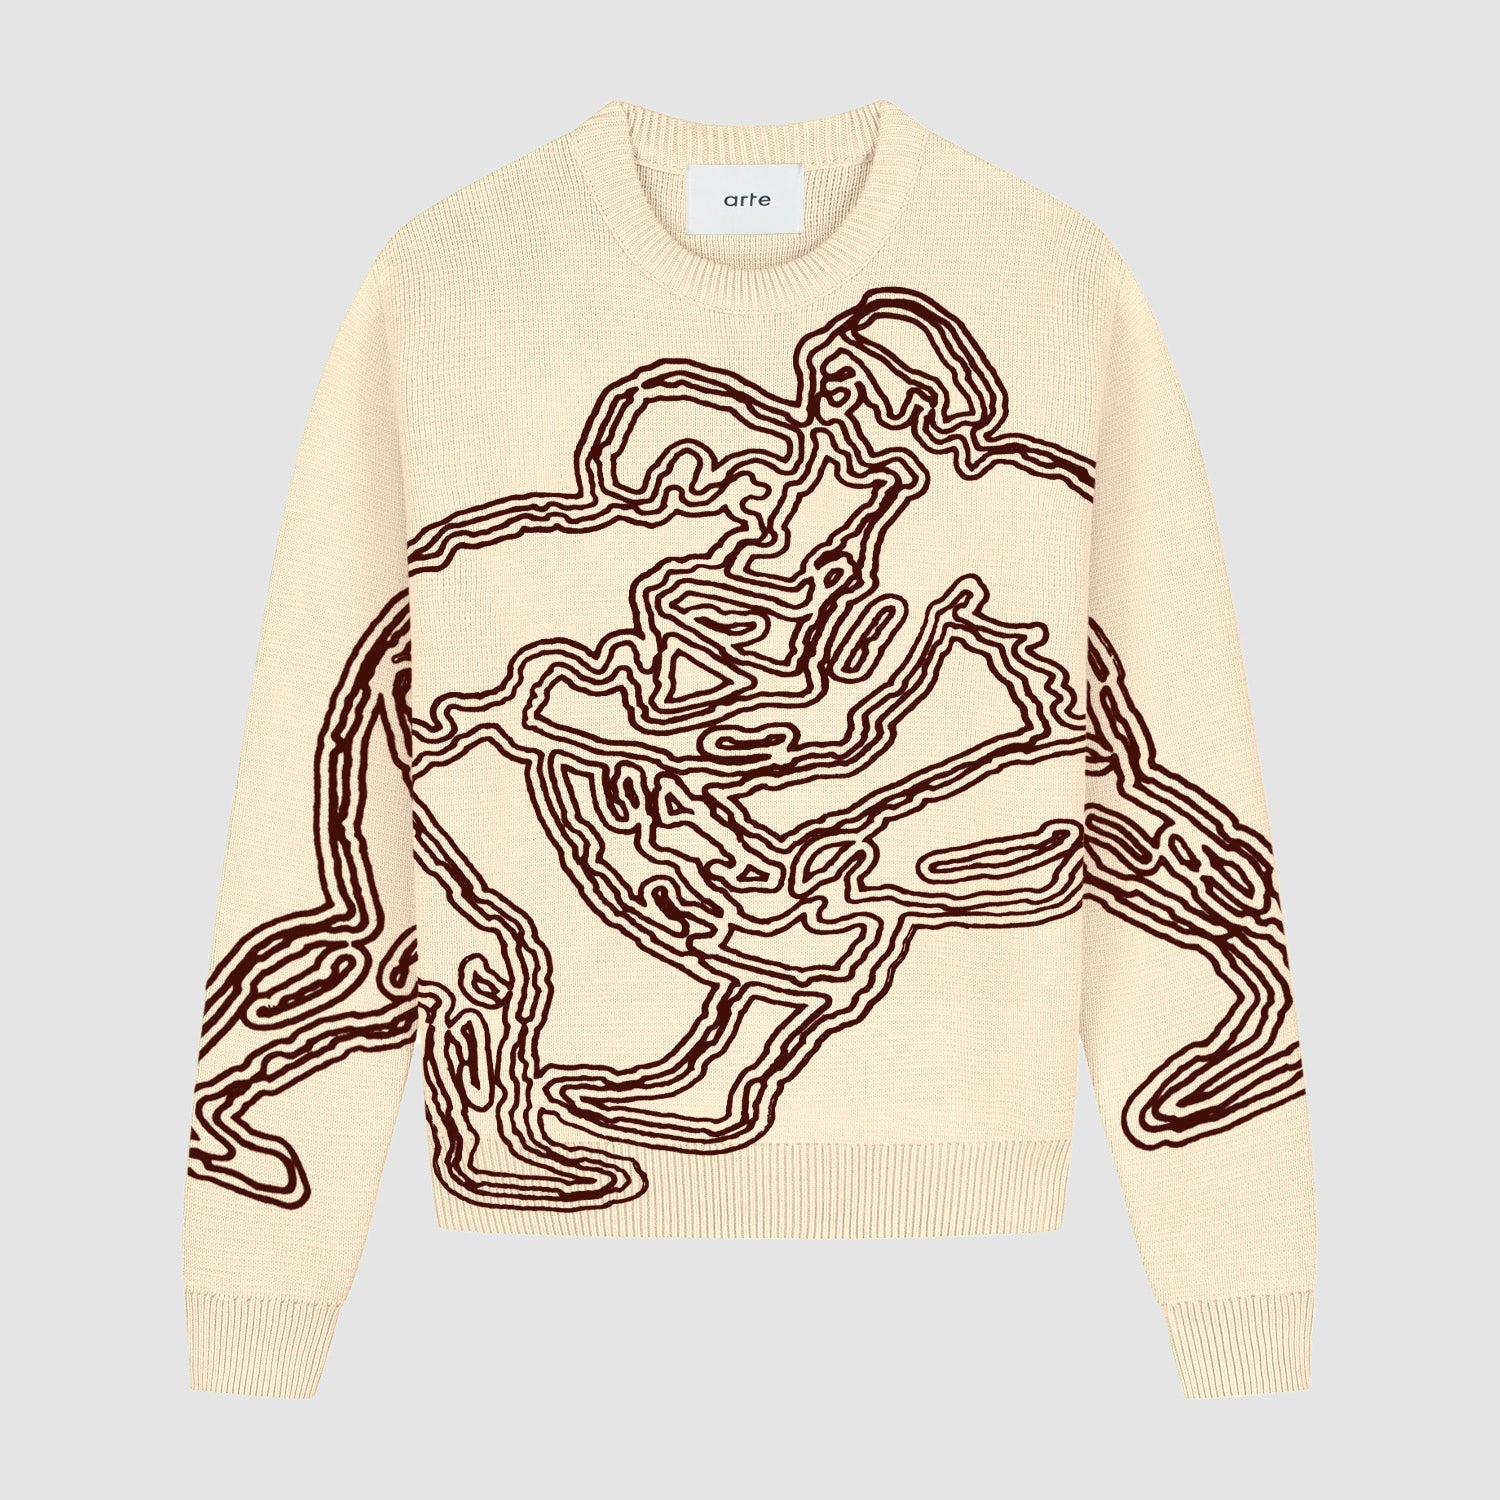 Arte Kris Fighter Sweater - Cream